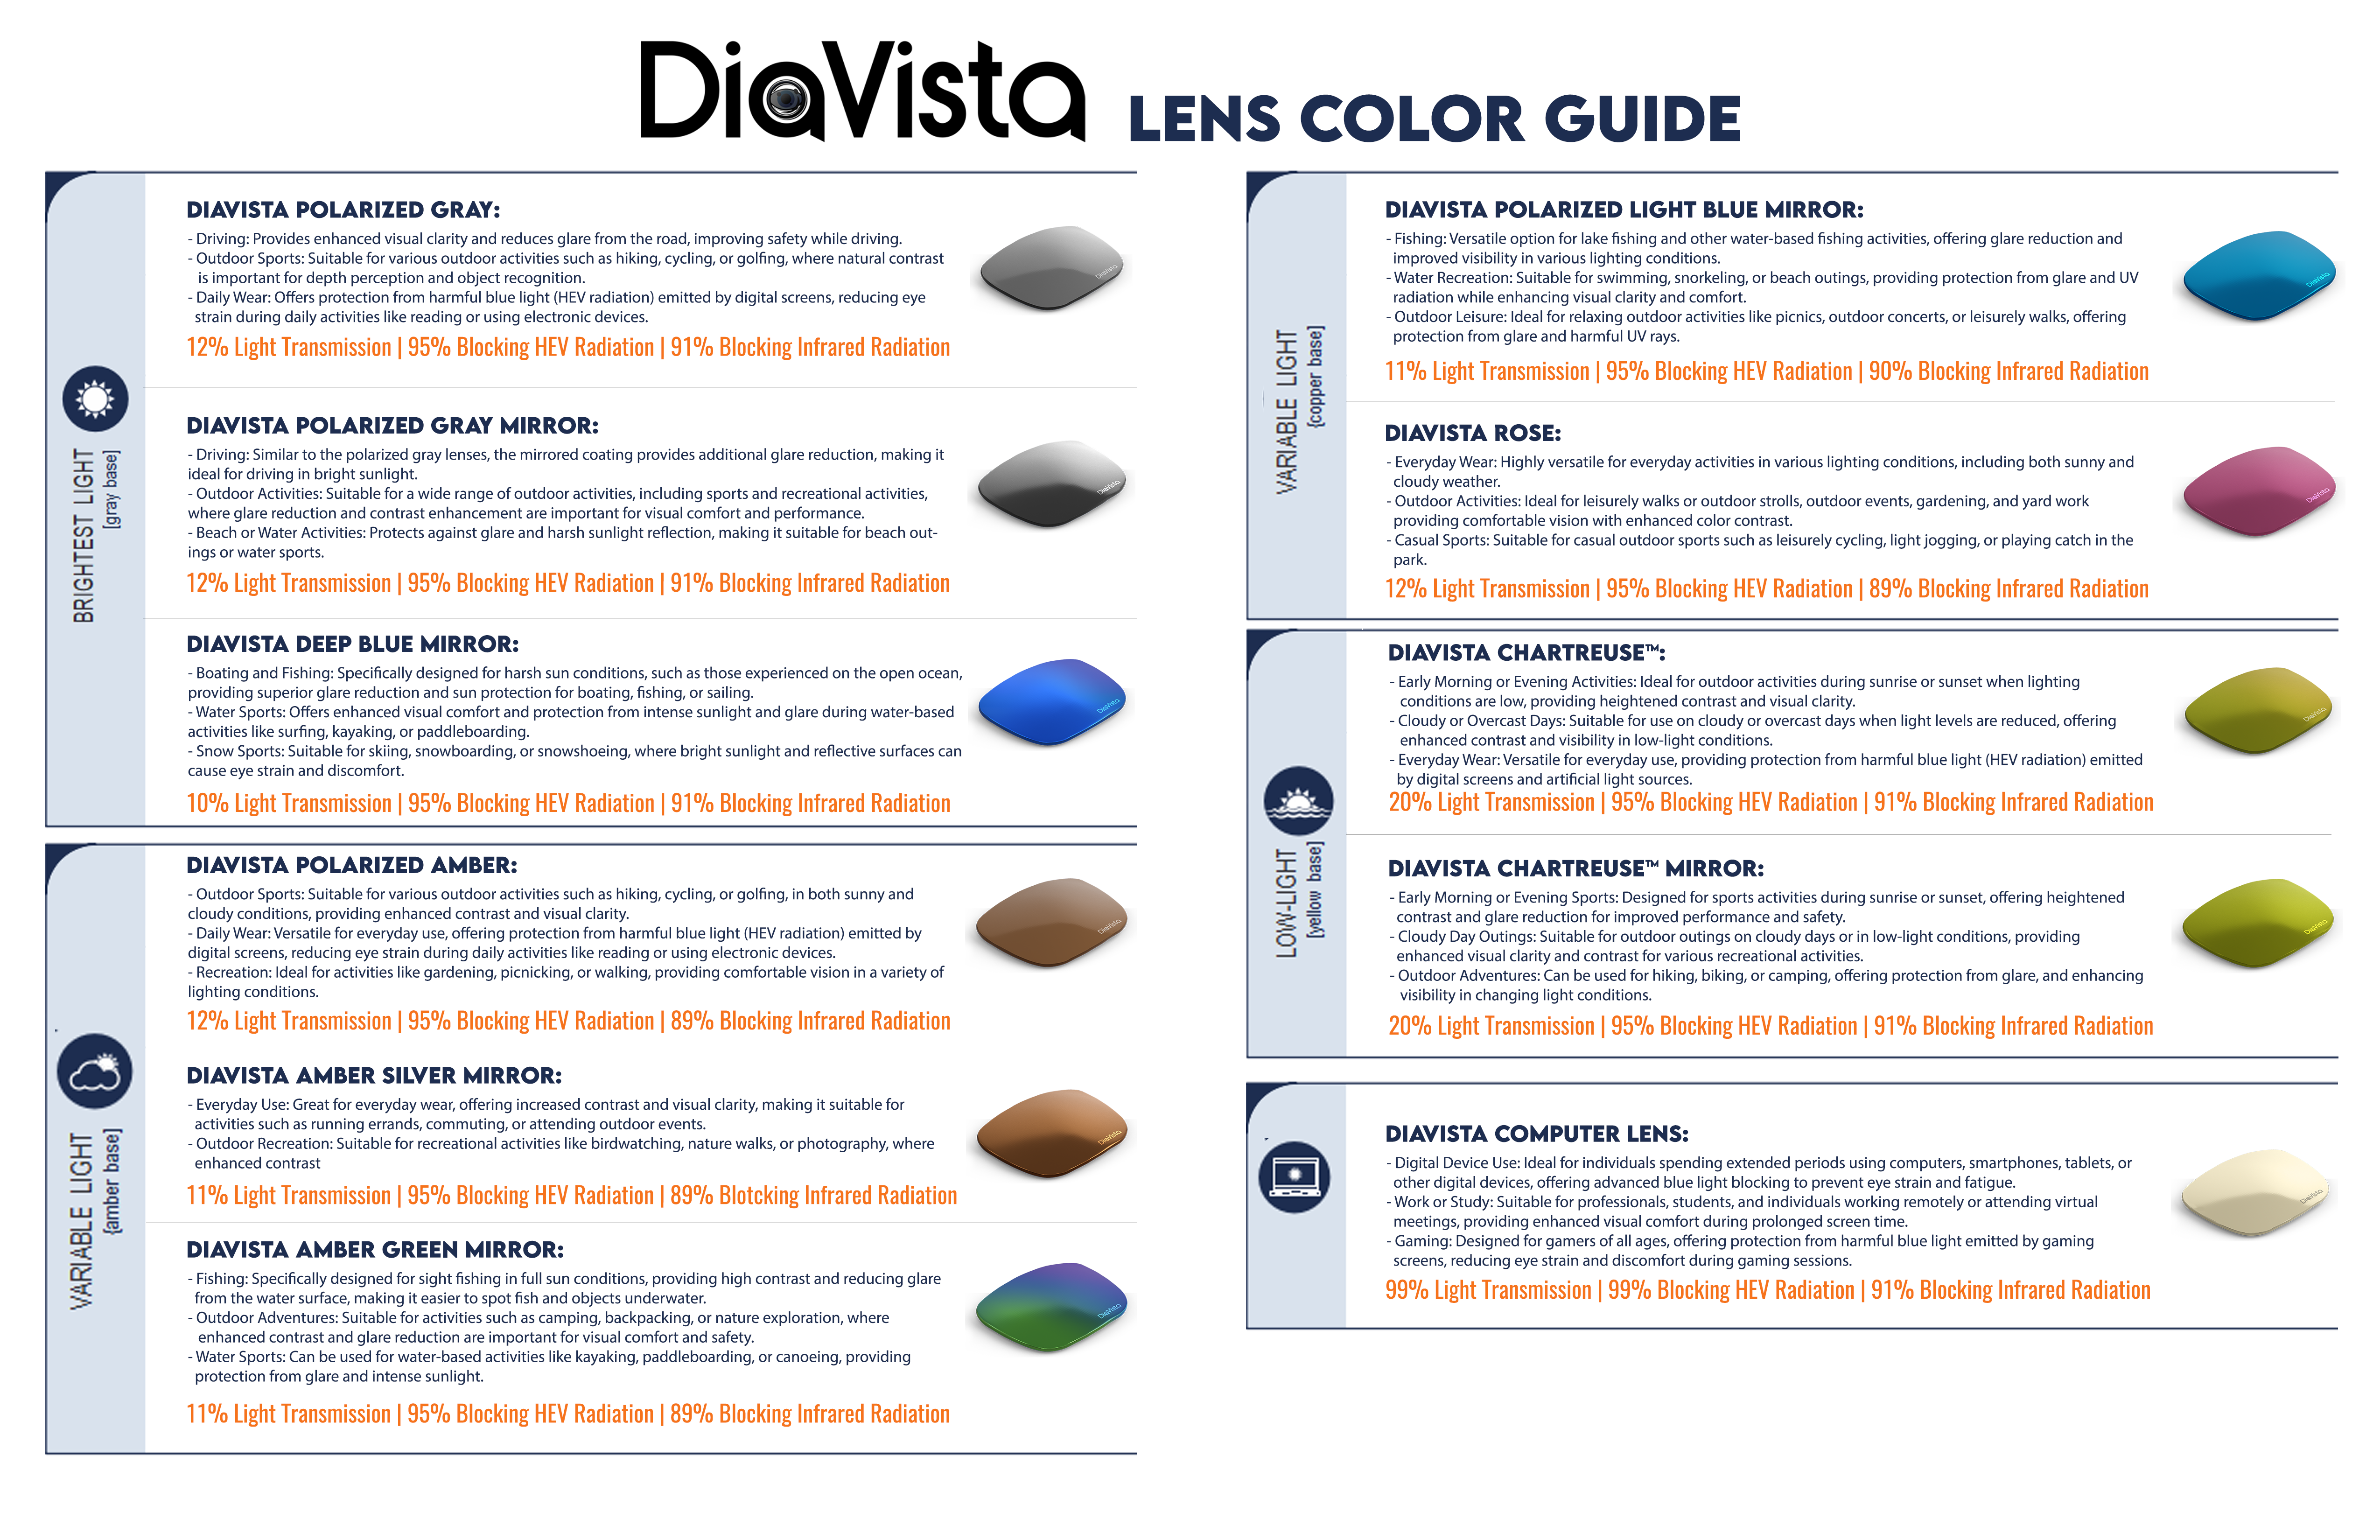 Diavista Diabetic lenses color guide. Different colored lenses for diabetic glasses